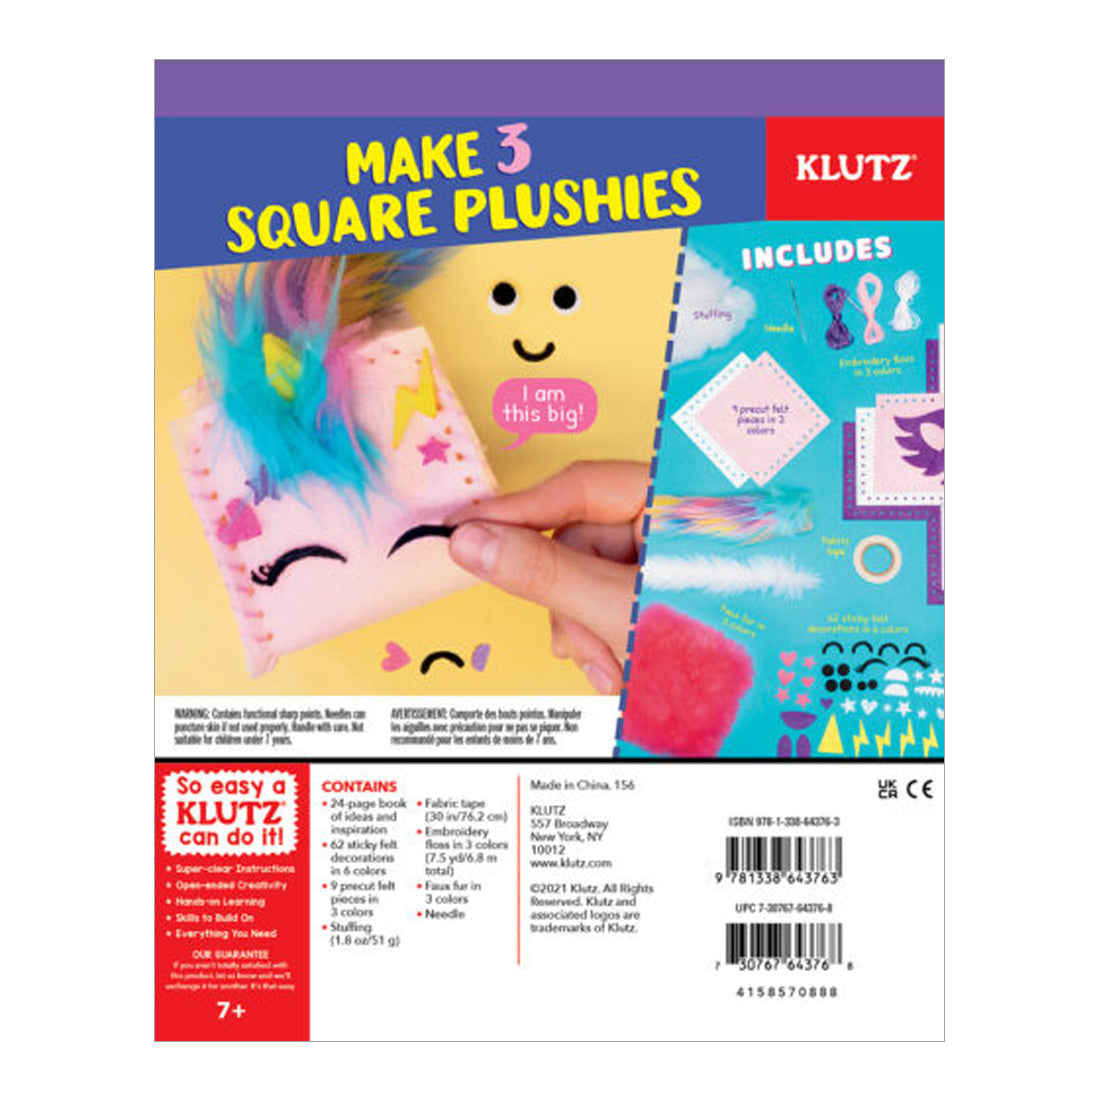 Klutz: Book & Activity Kit: Sew Squishy Cubes